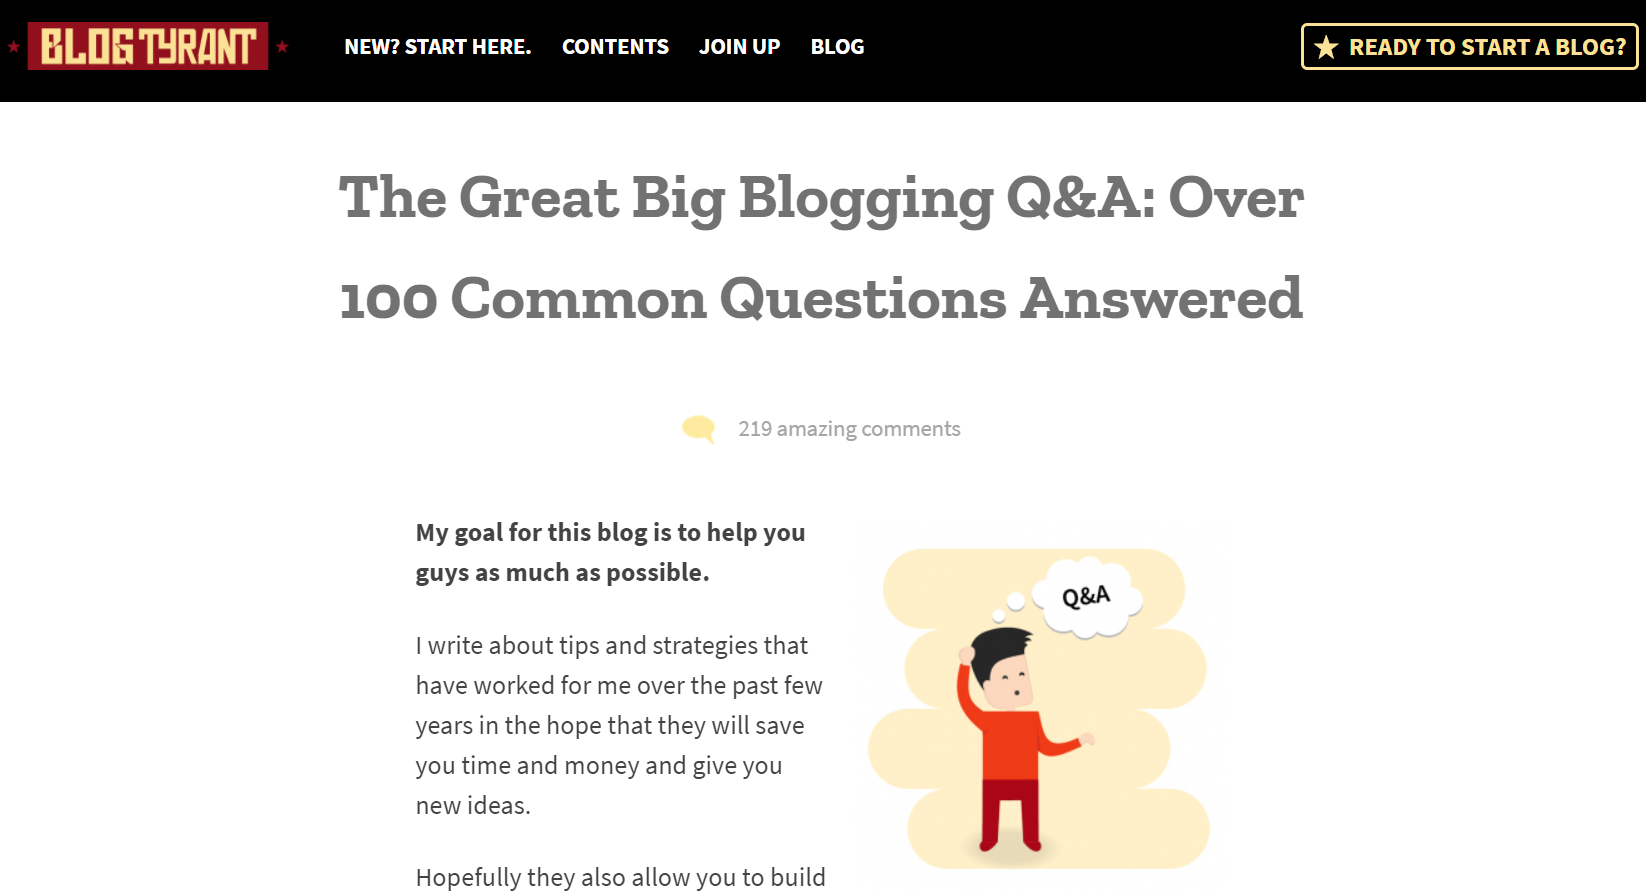 Blog Tyrant - The Great Big Blogging Q&A